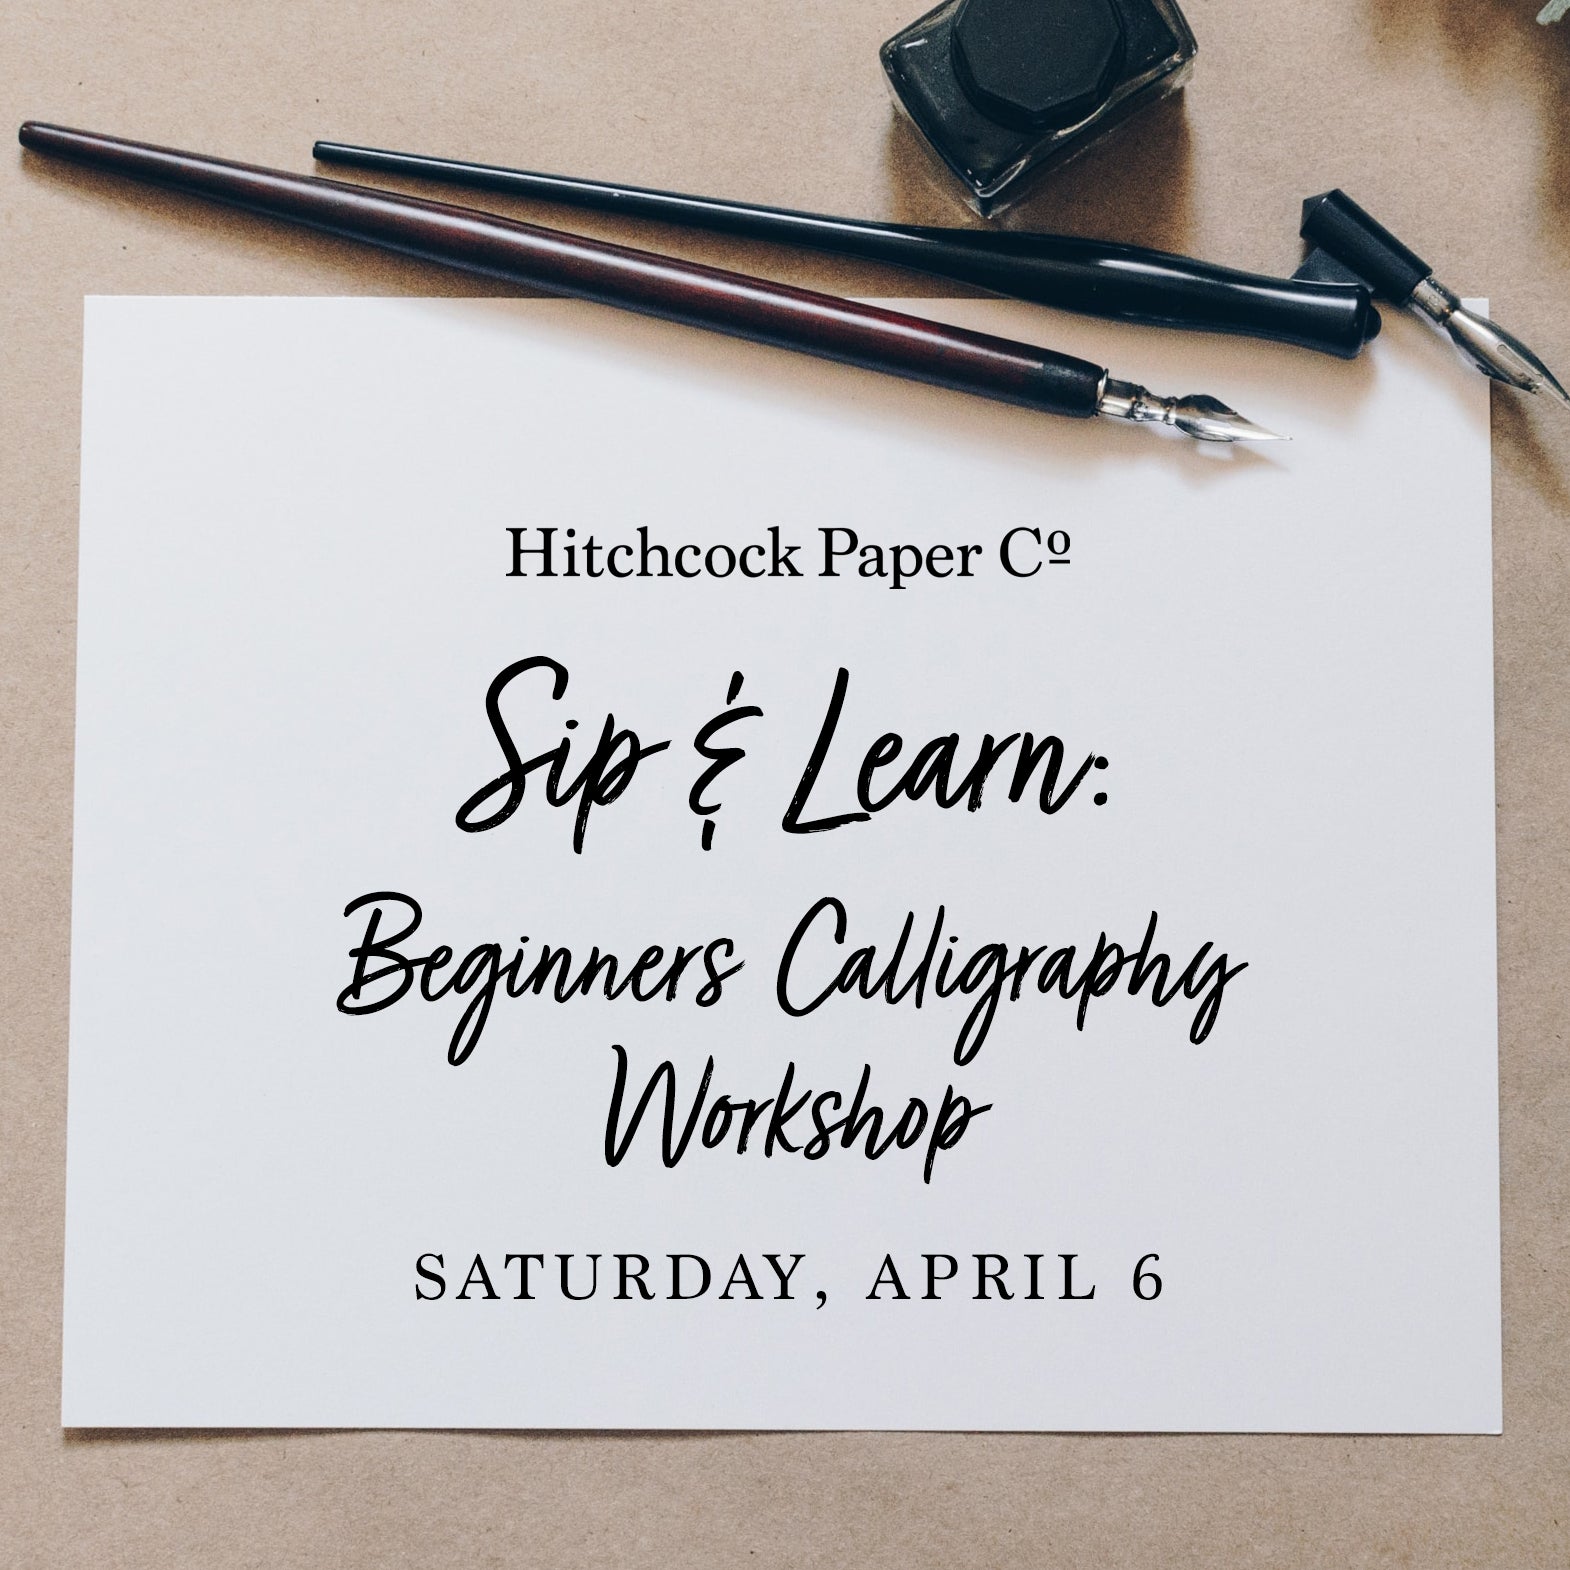 Sip & Learn: Beginners Calligraphy Workshop (April 6)